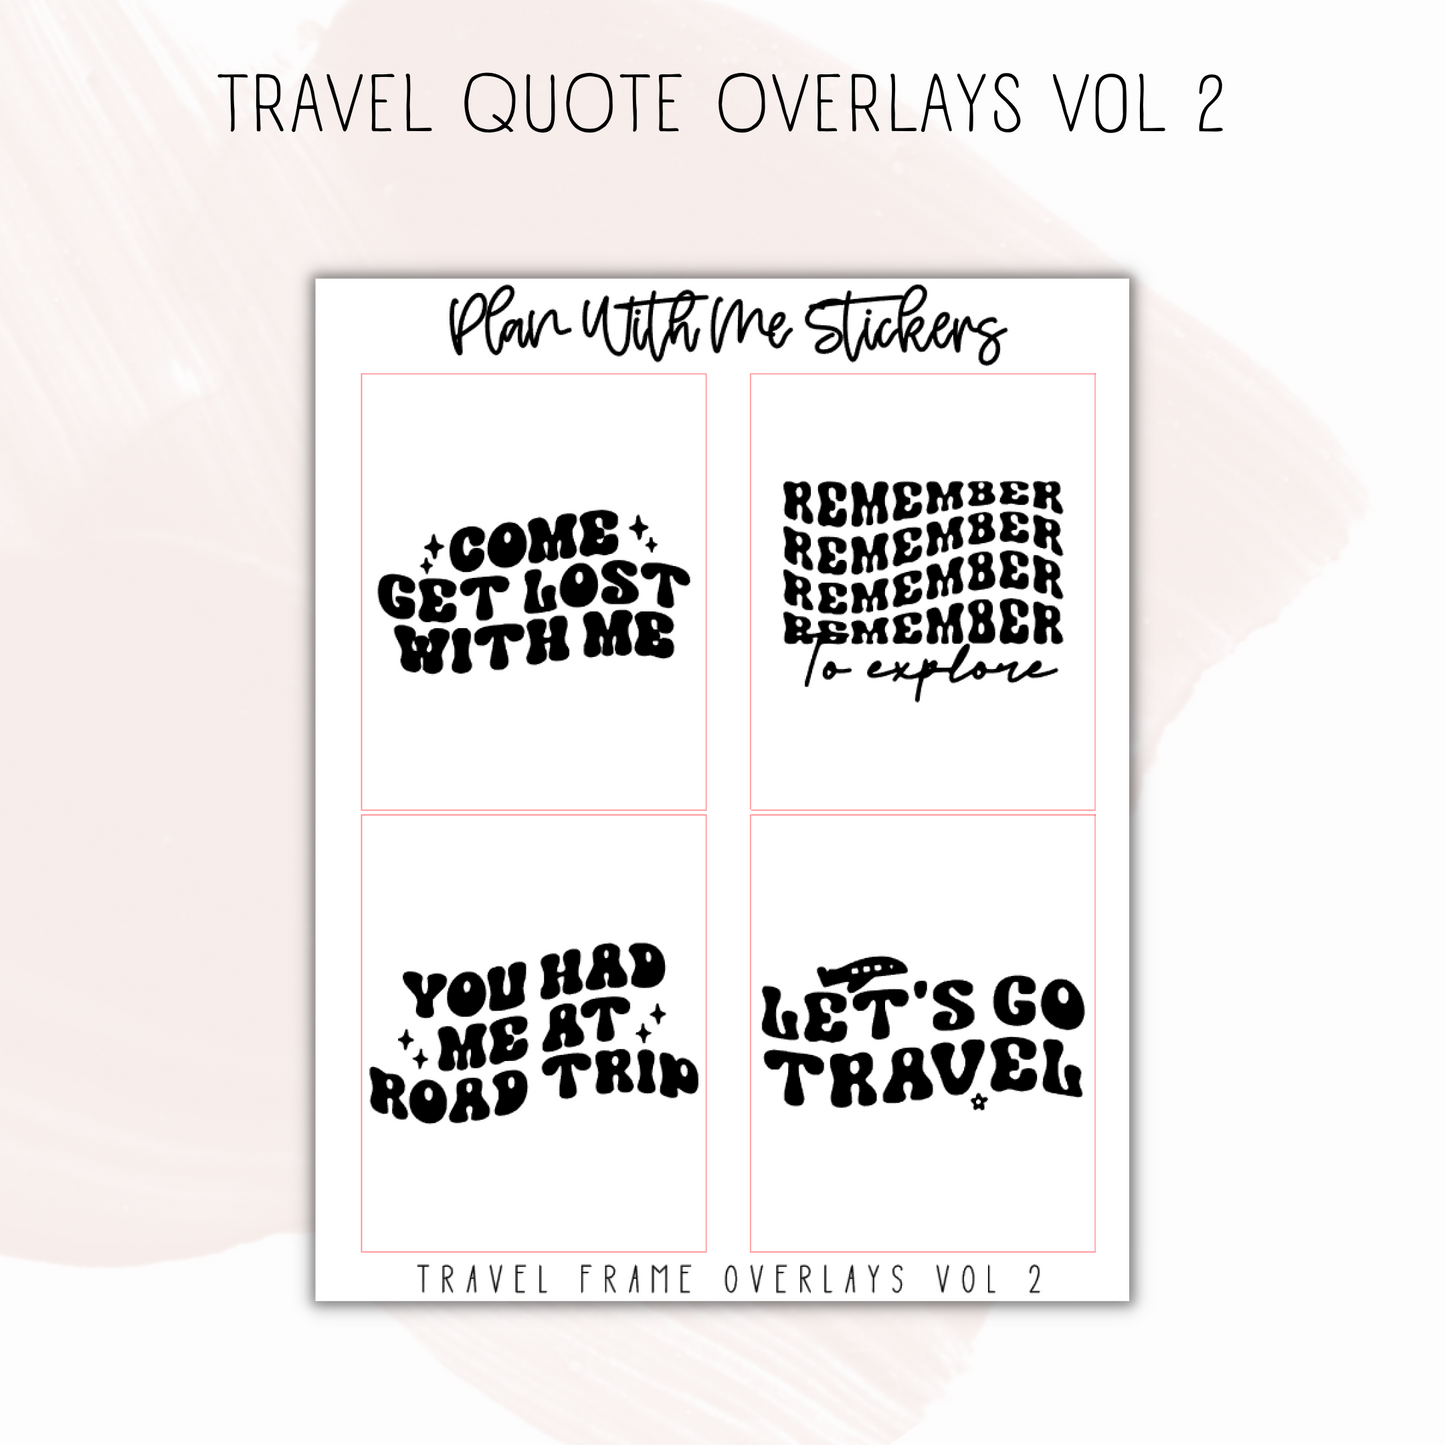 Travel Quote Overlays Vol 2